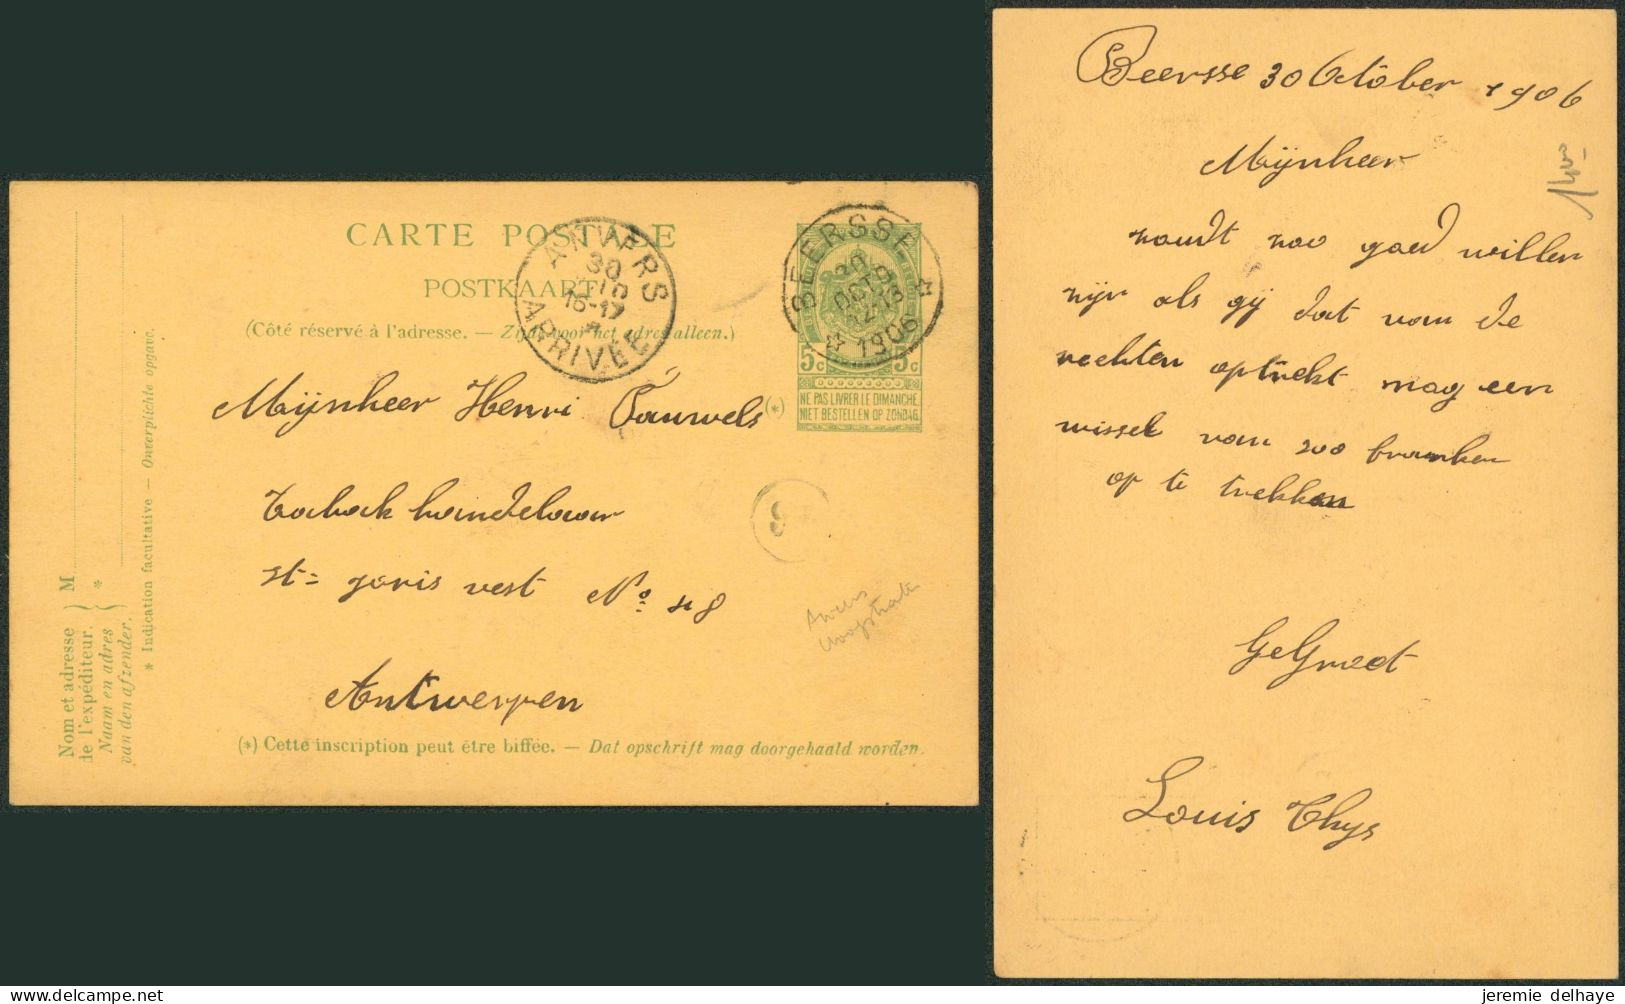 EP Au Type 5ctm Vert Obl Relais "Beersse" (1906) > Anvers - Postmarks With Stars